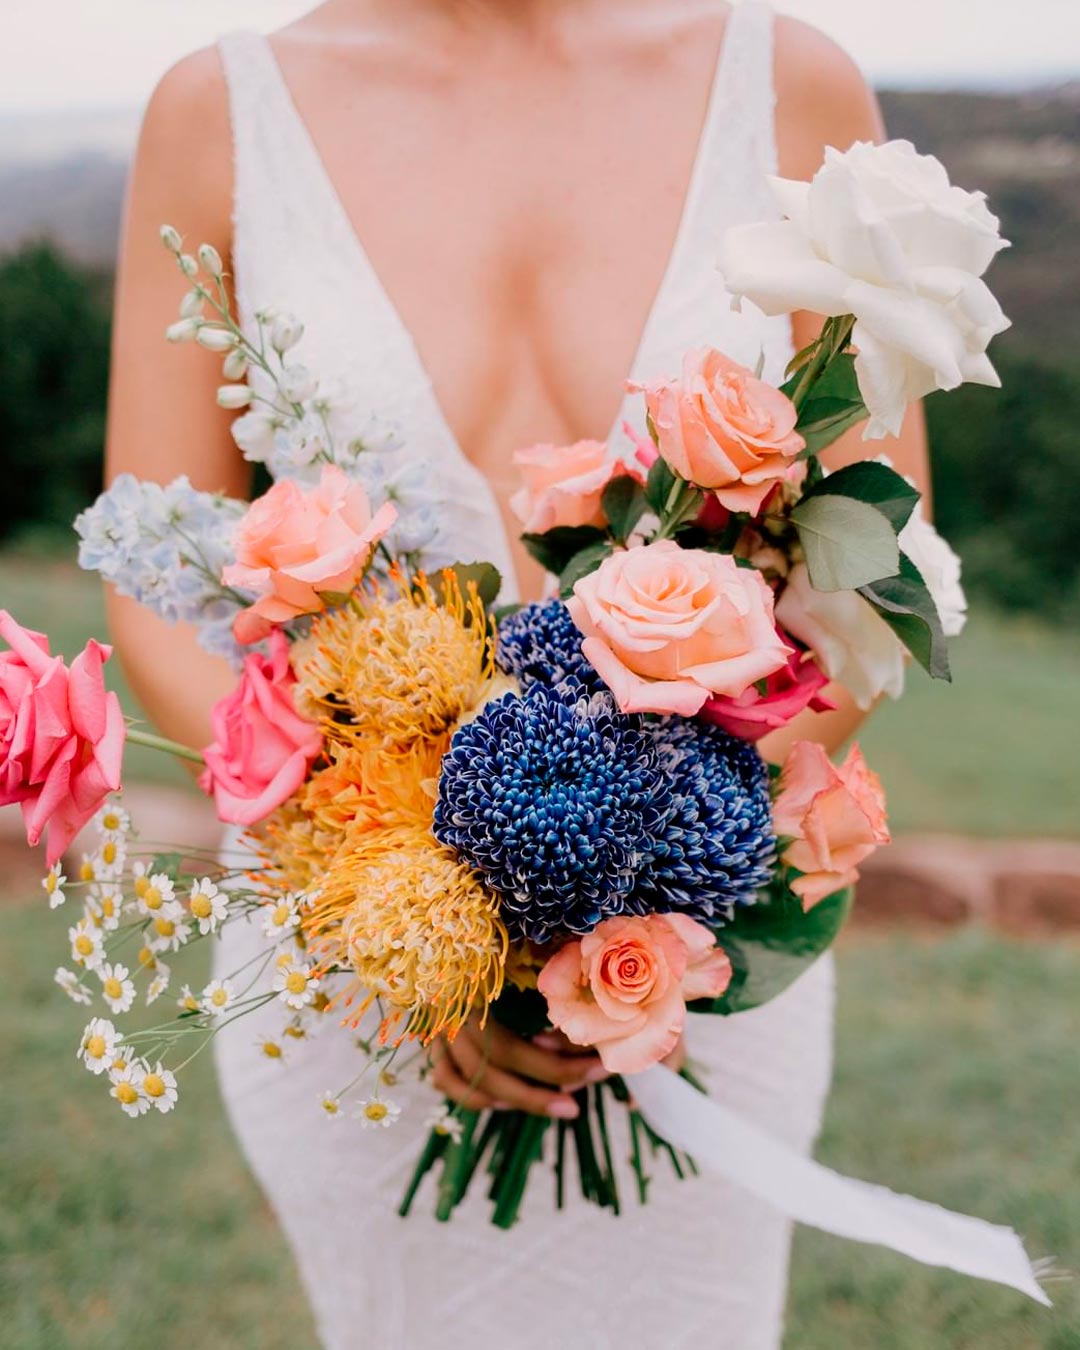 how to choose wedding colors bouquet bride